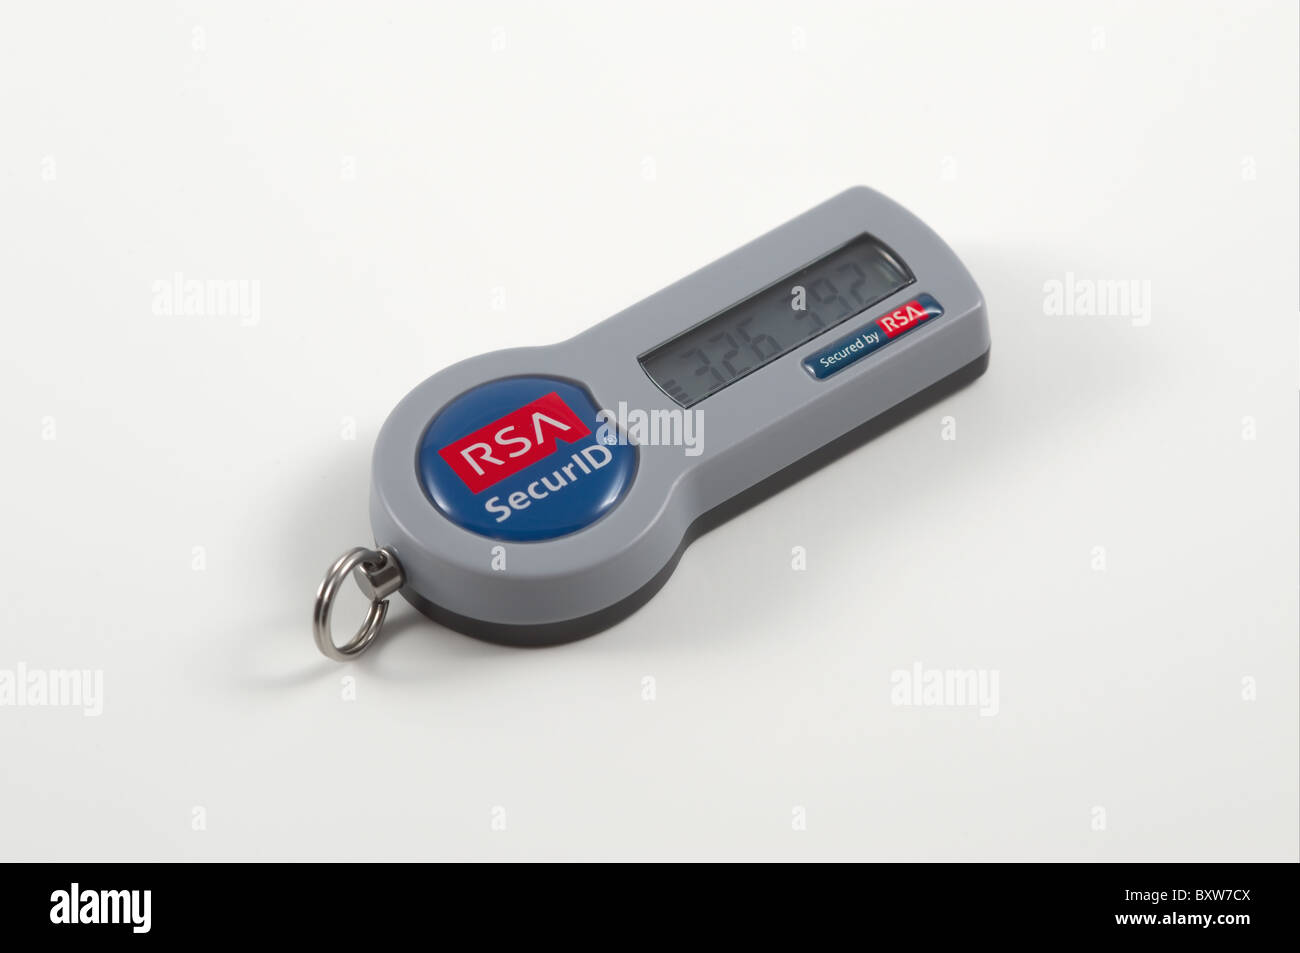 RSA SecurID token Stock Photo - Alamy